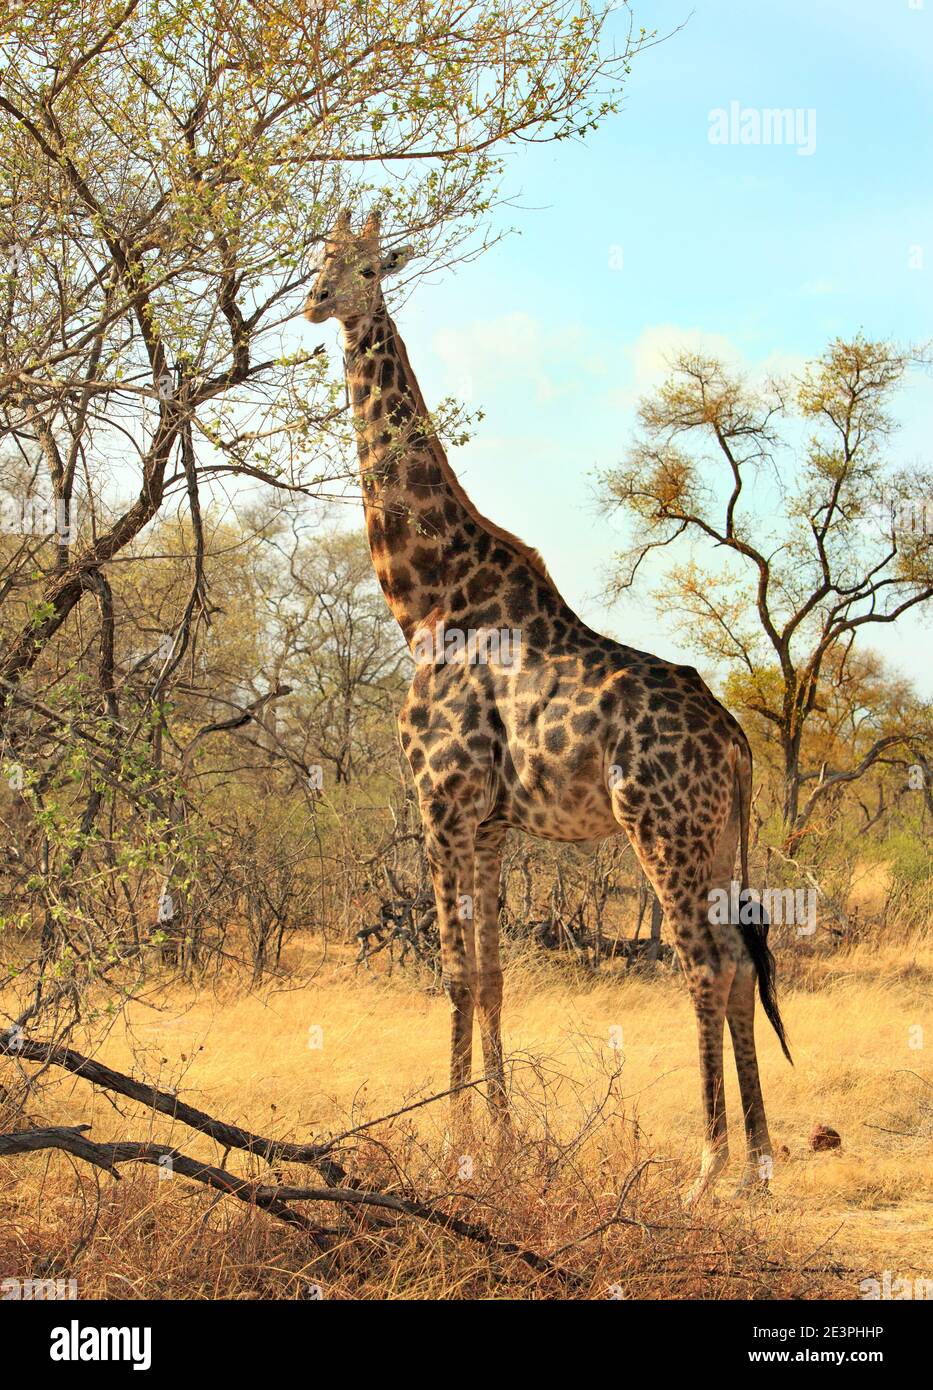 Angolan Giraffe Browsing on fresh foliage Stock Photo